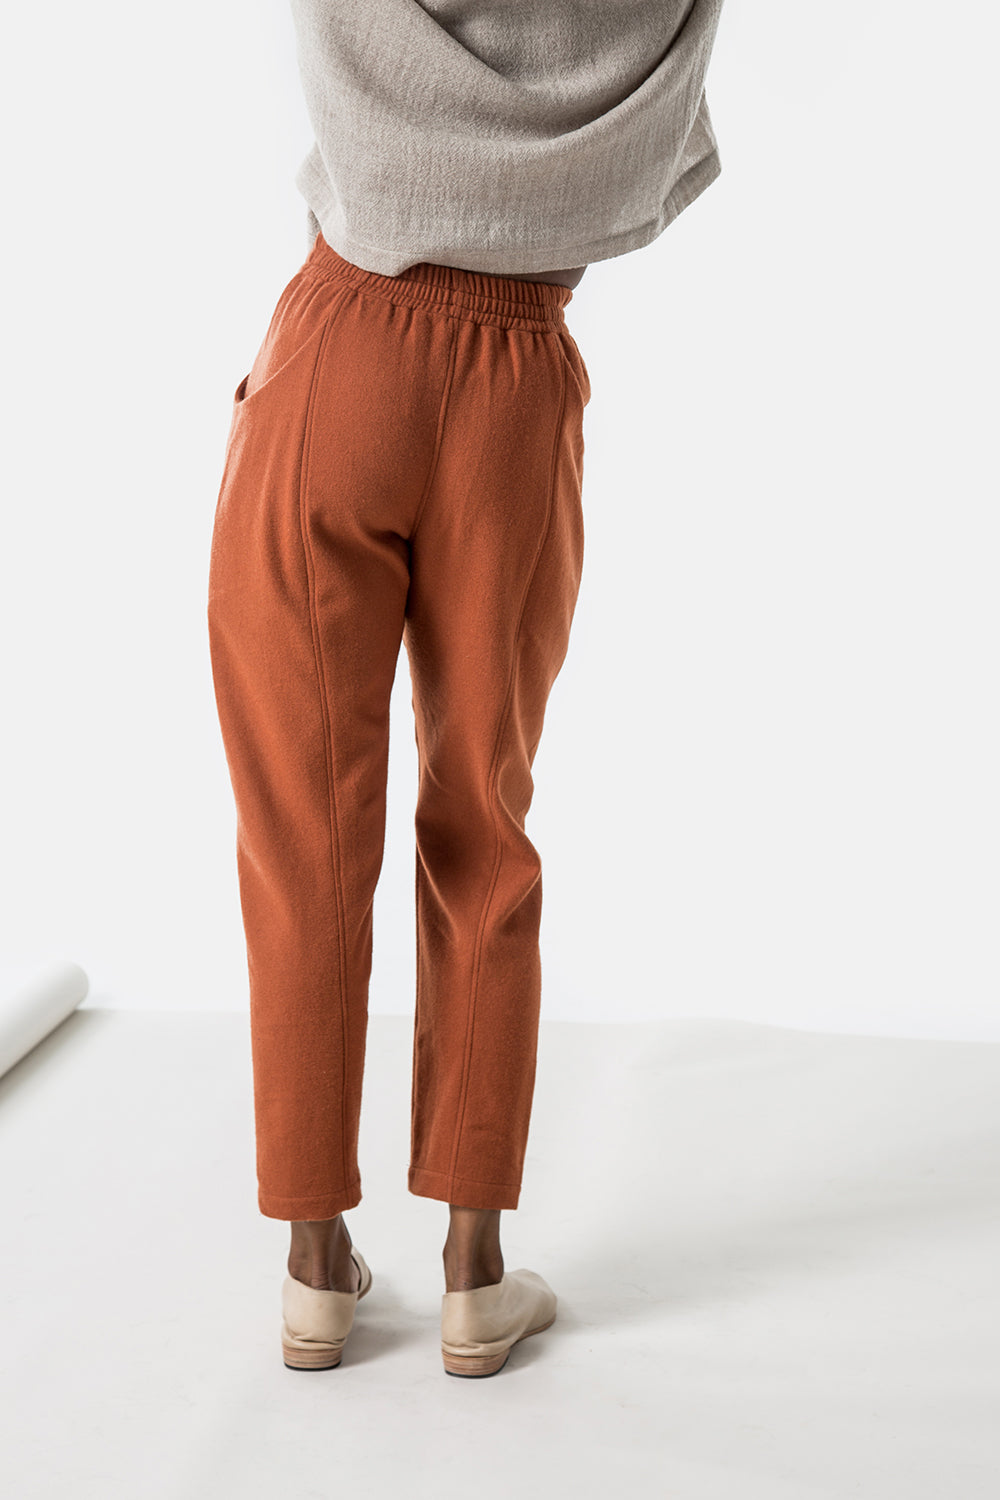 Trendy Stylish Denim Lycra Knot Pant For Women at Rs 674/piece | महिलाओ की  पैंट, लेडीज़ पैंट - PR Retail, Durgapur | ID: 24750850455